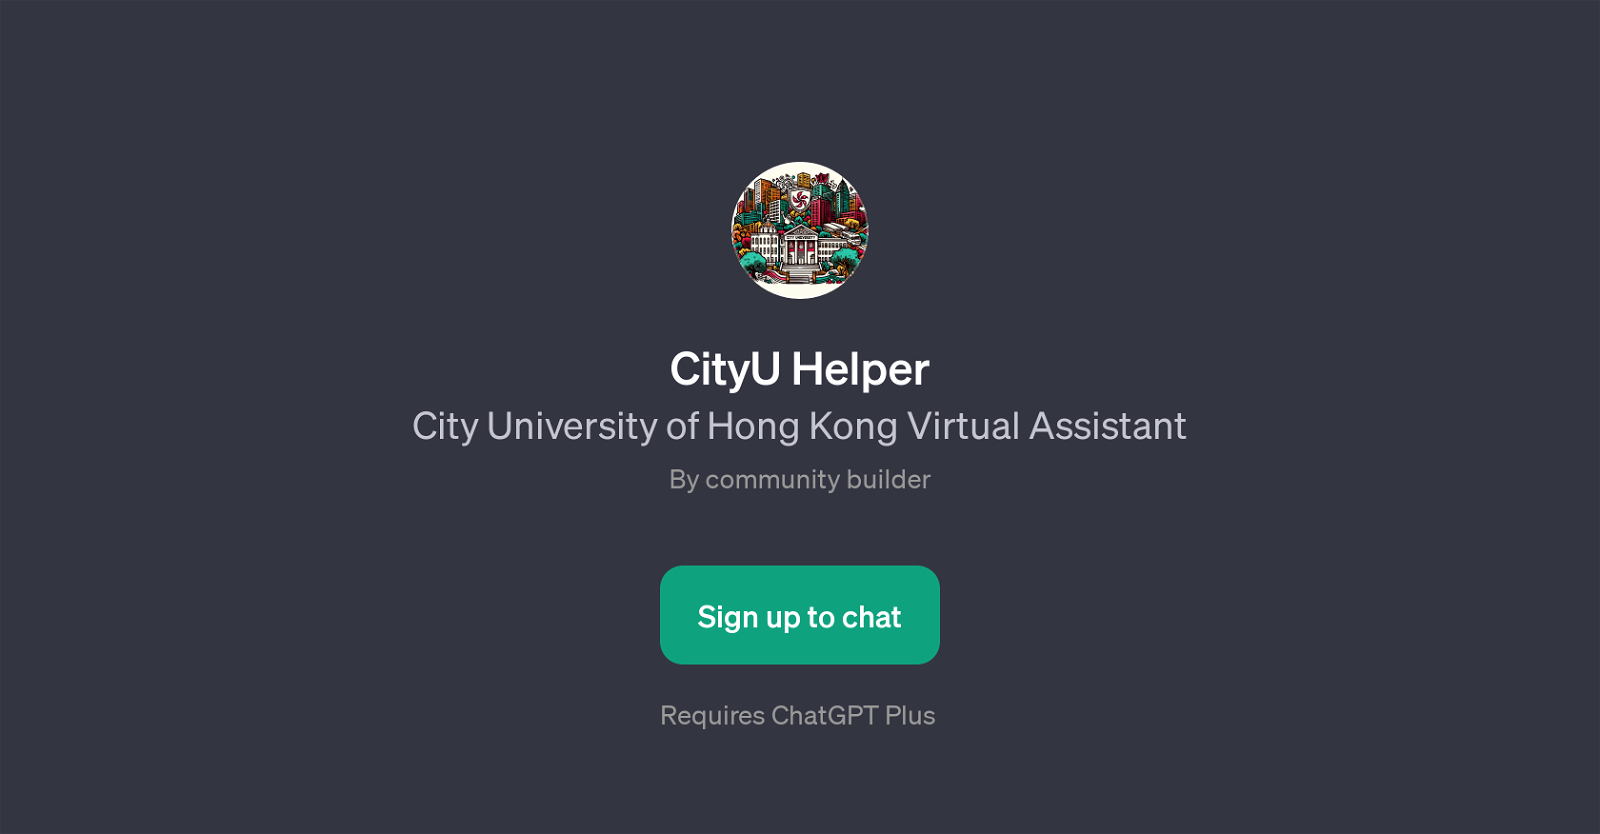 CityU Helper website